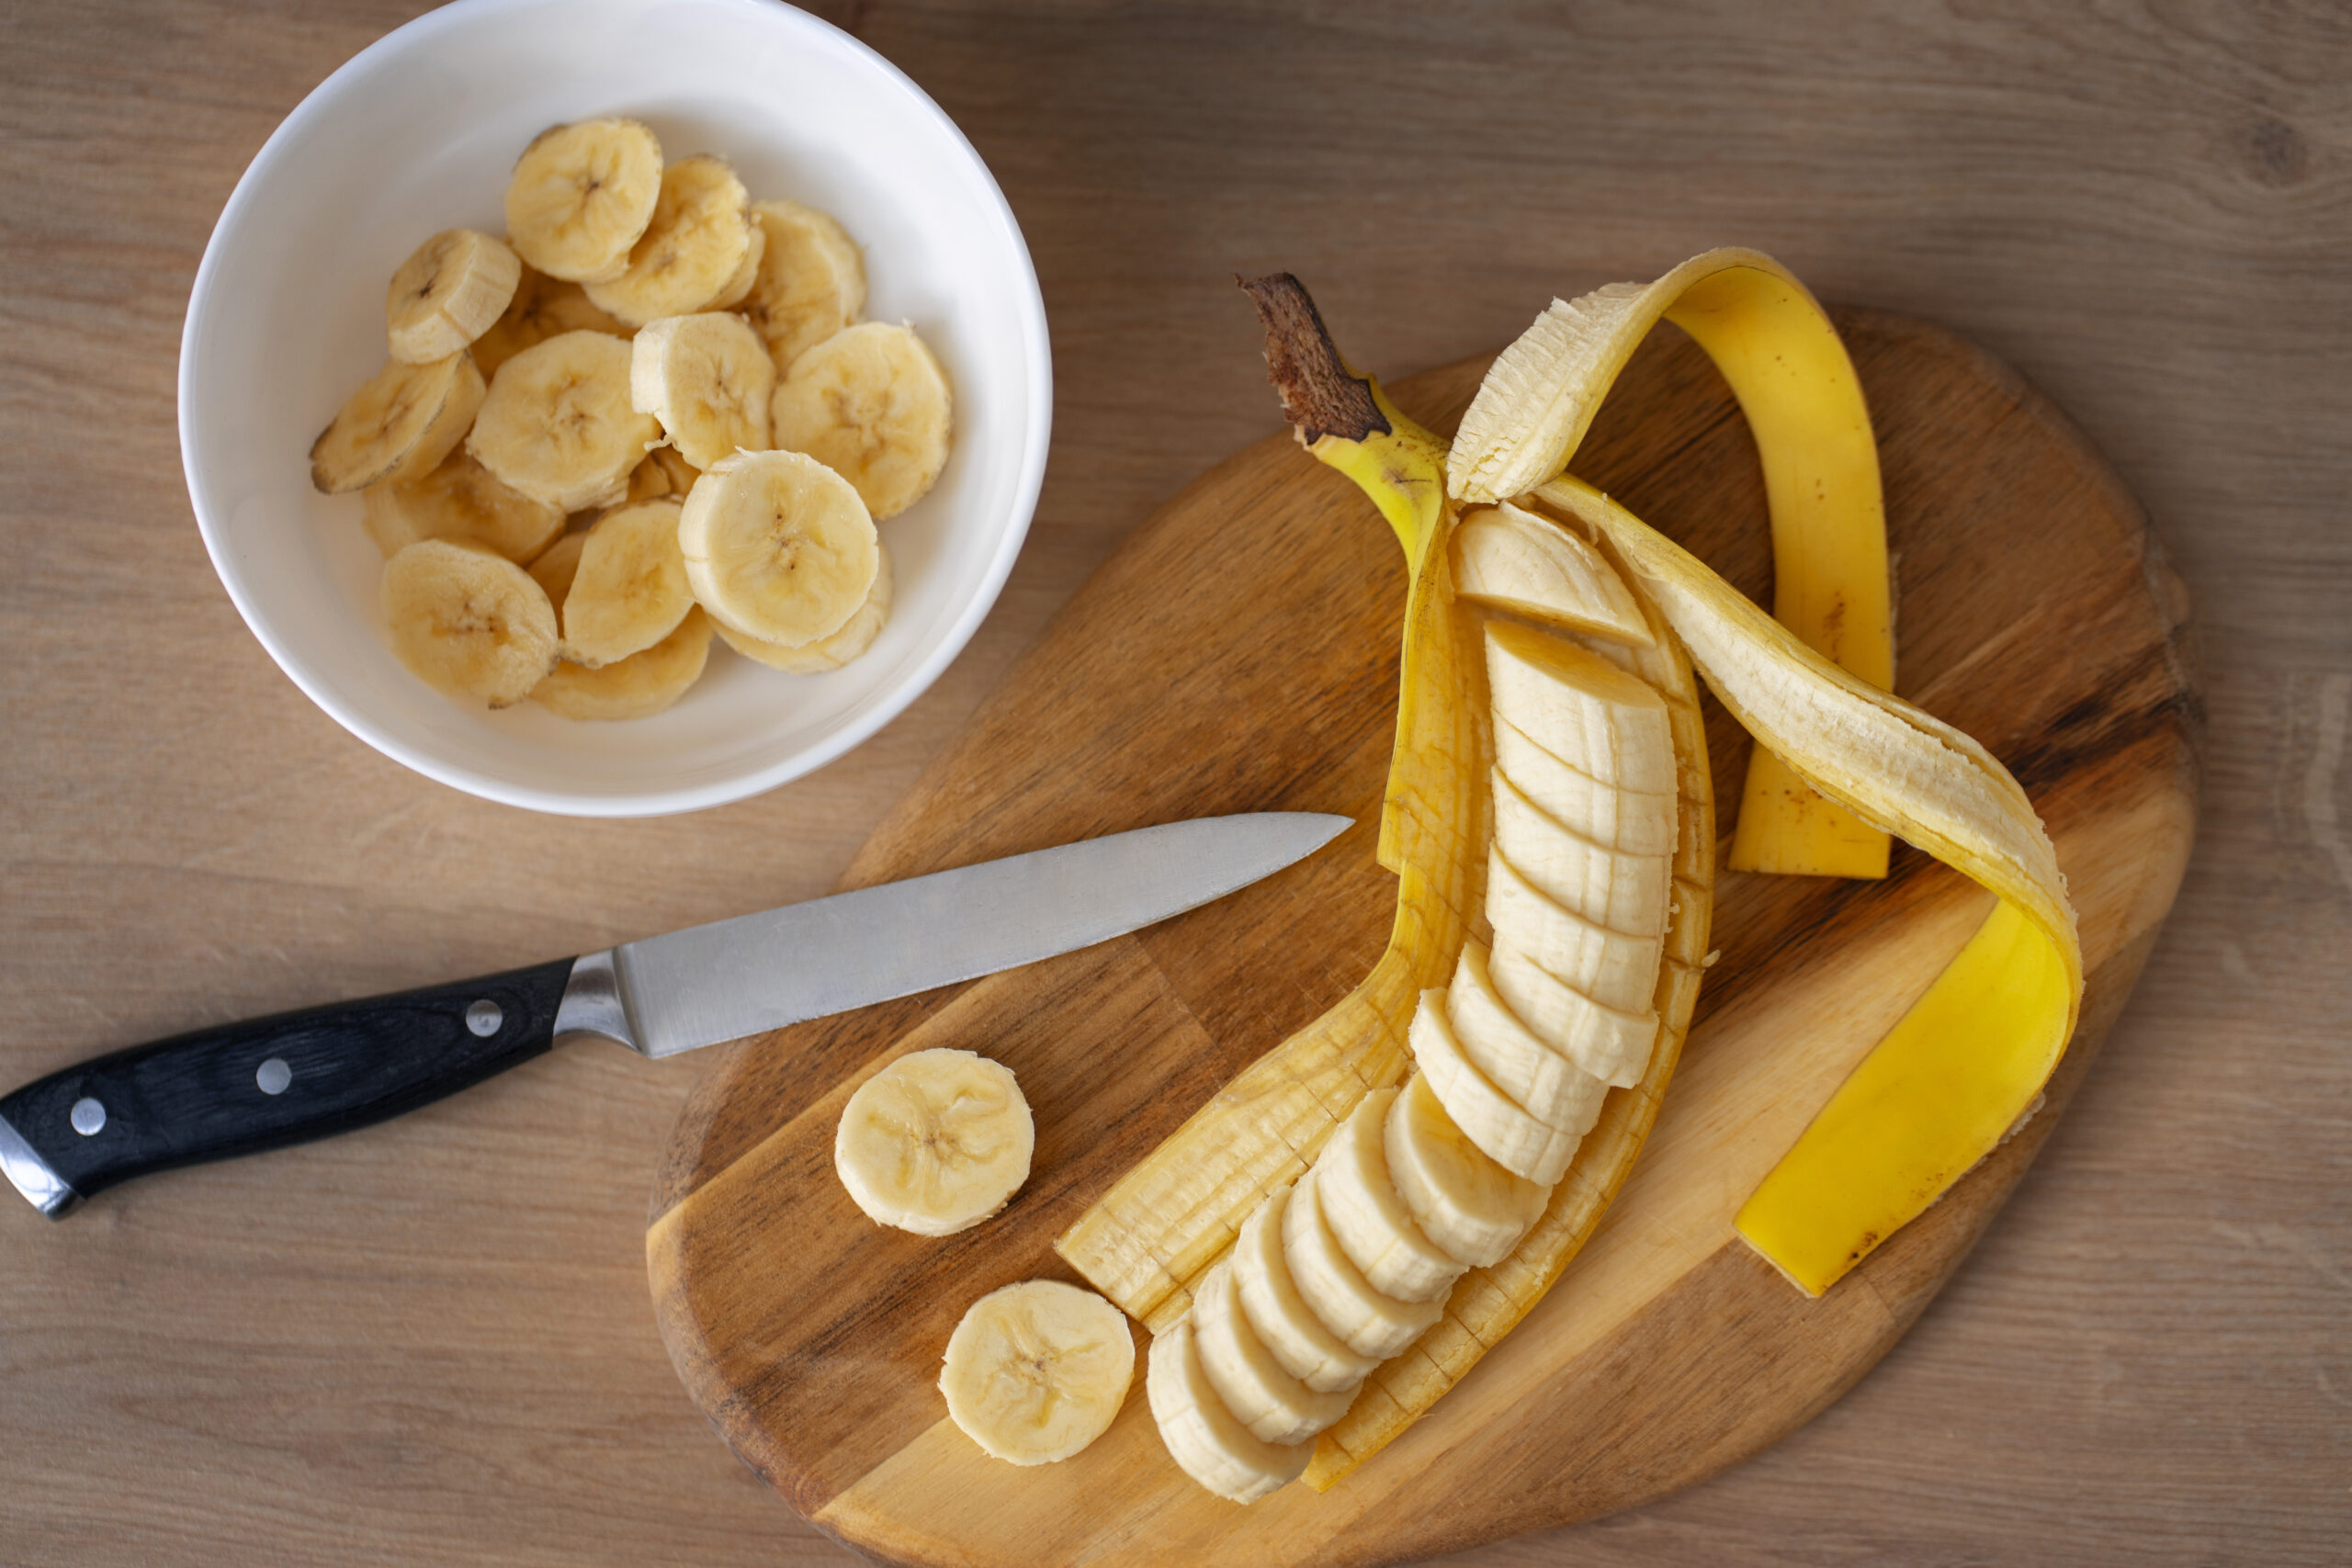 disease-resistant banana | https://fruitsauction.com/